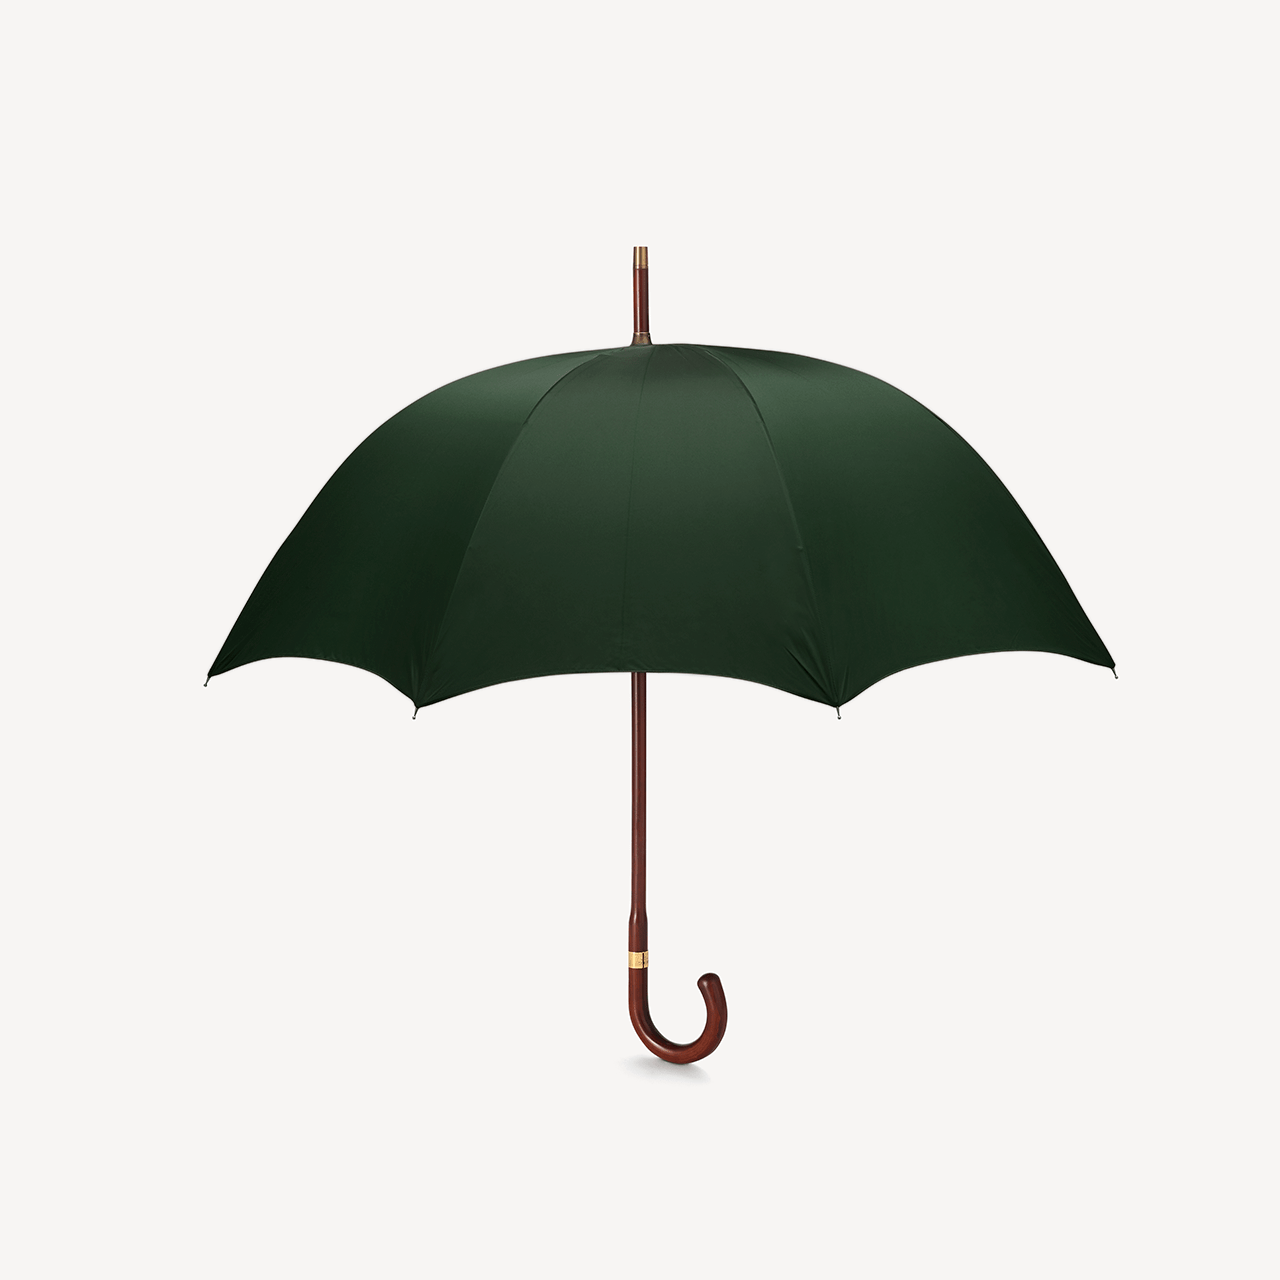 Stripped Cherry Umbrella for Men - Jaguar Green - Swaine